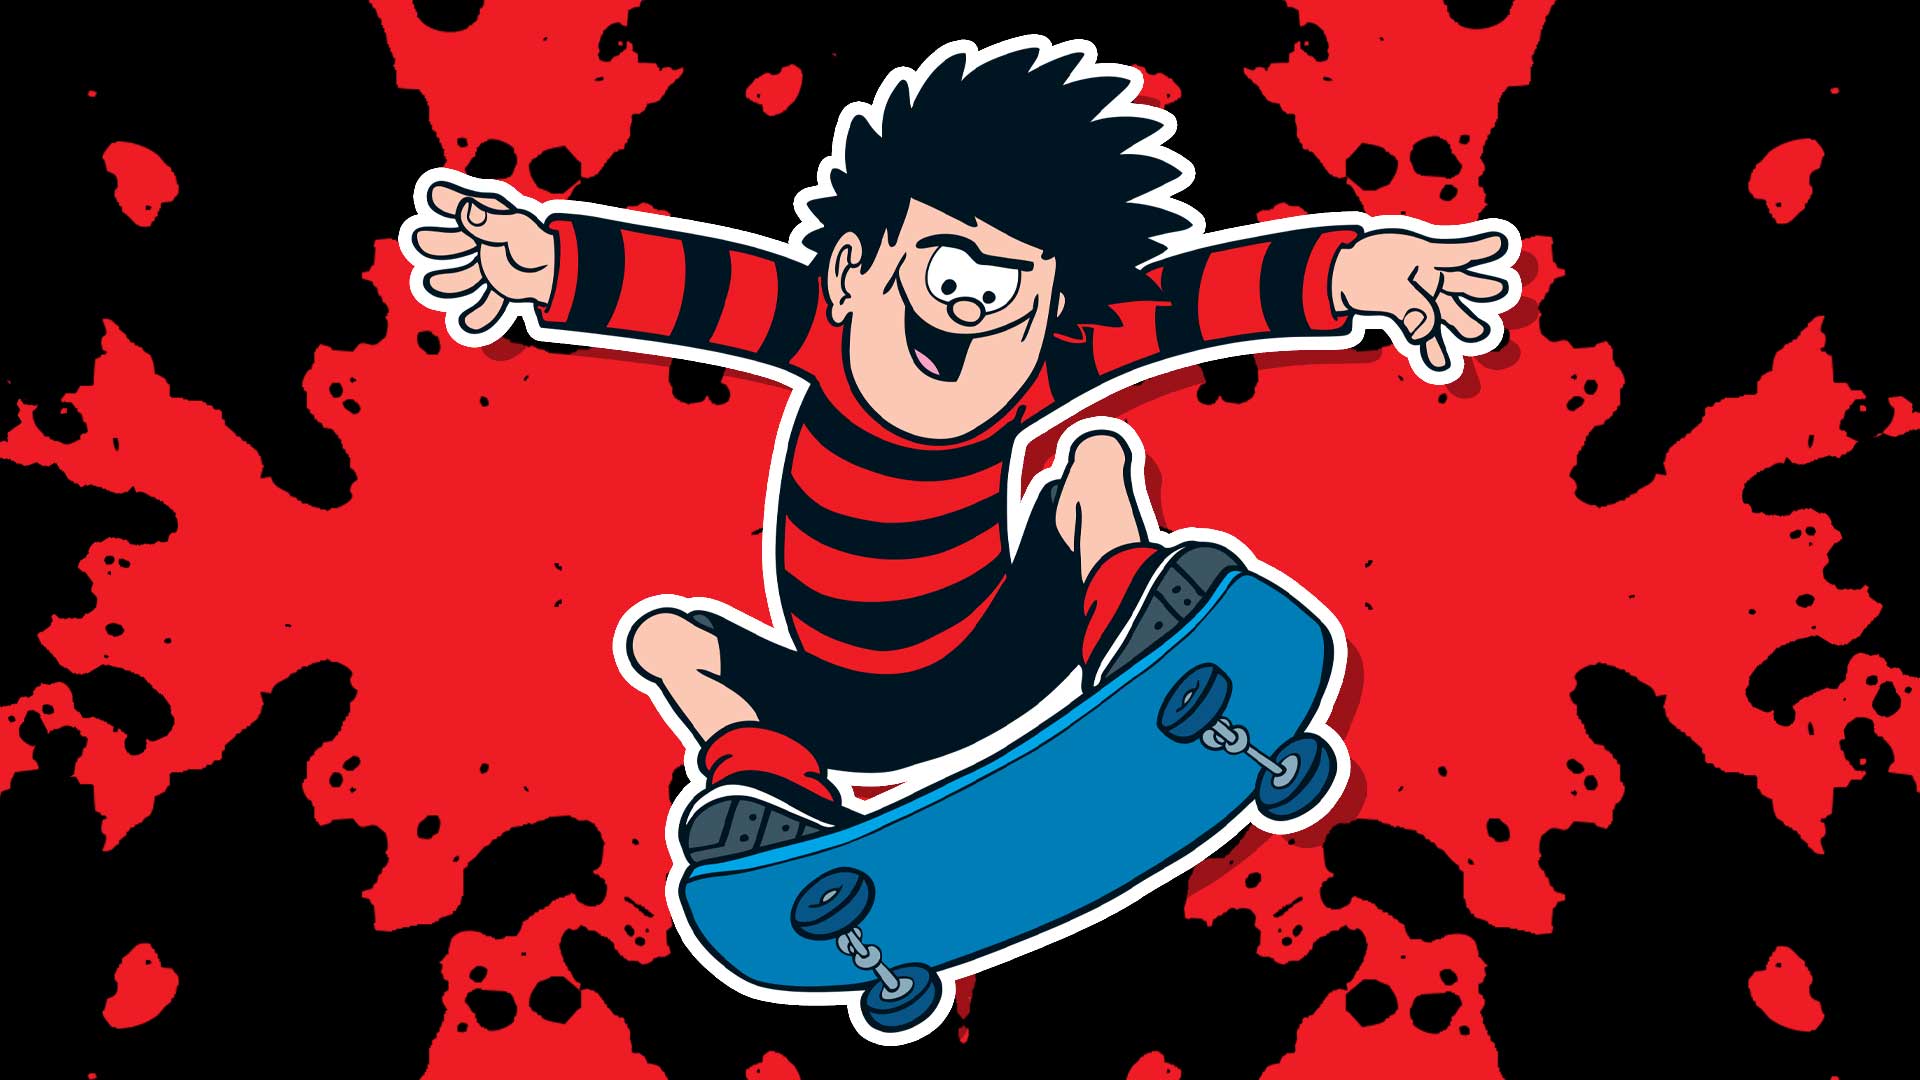 Dennis doing a blam skateboard trick 